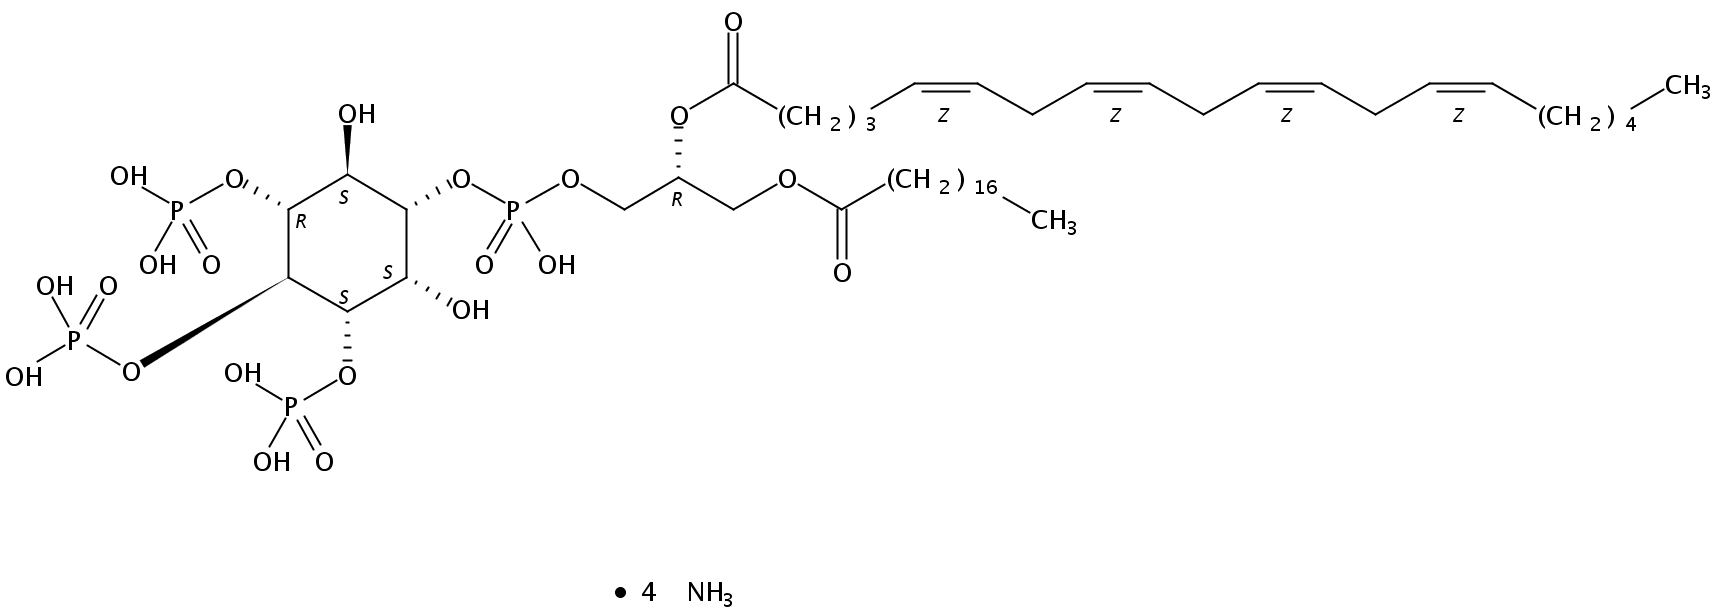 1-stearoyl-2-arachidonoyl-sn-glycero-3-phospho-(1'-myo-inositol-3',4',5'-trisphosphate) (ammonium salt)